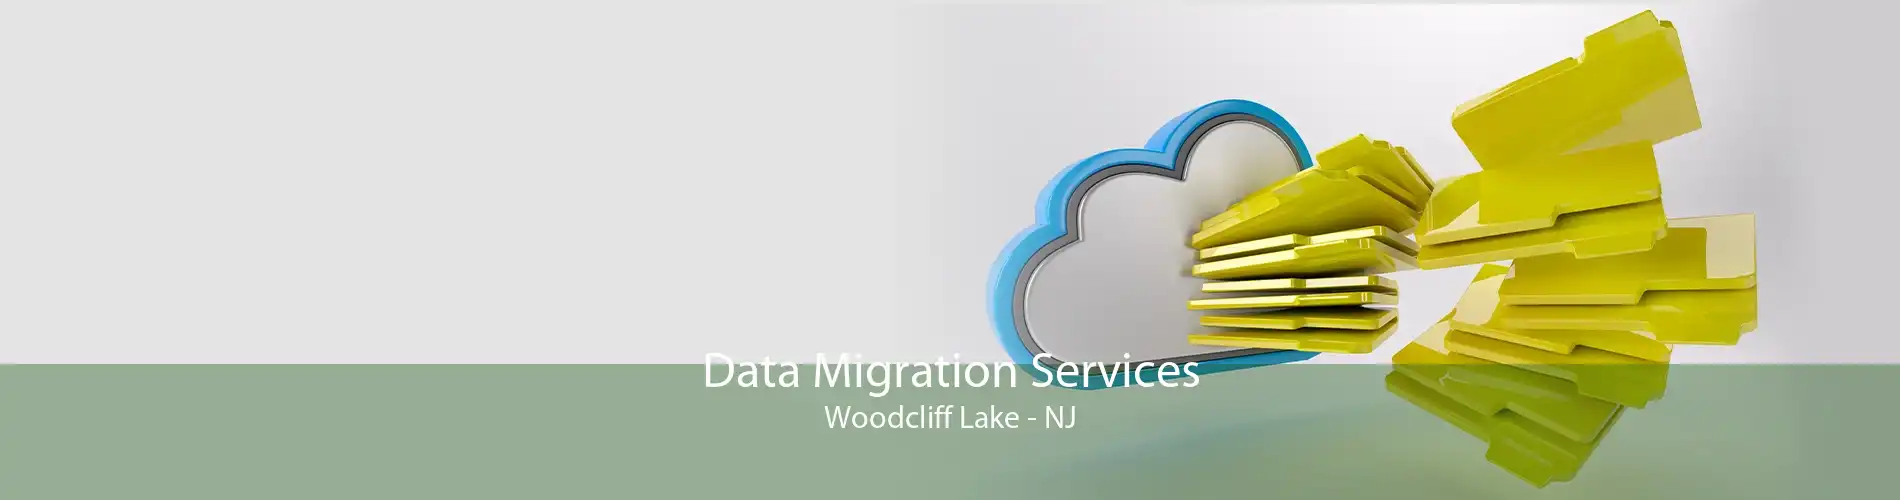 Data Migration Services Woodcliff Lake - NJ